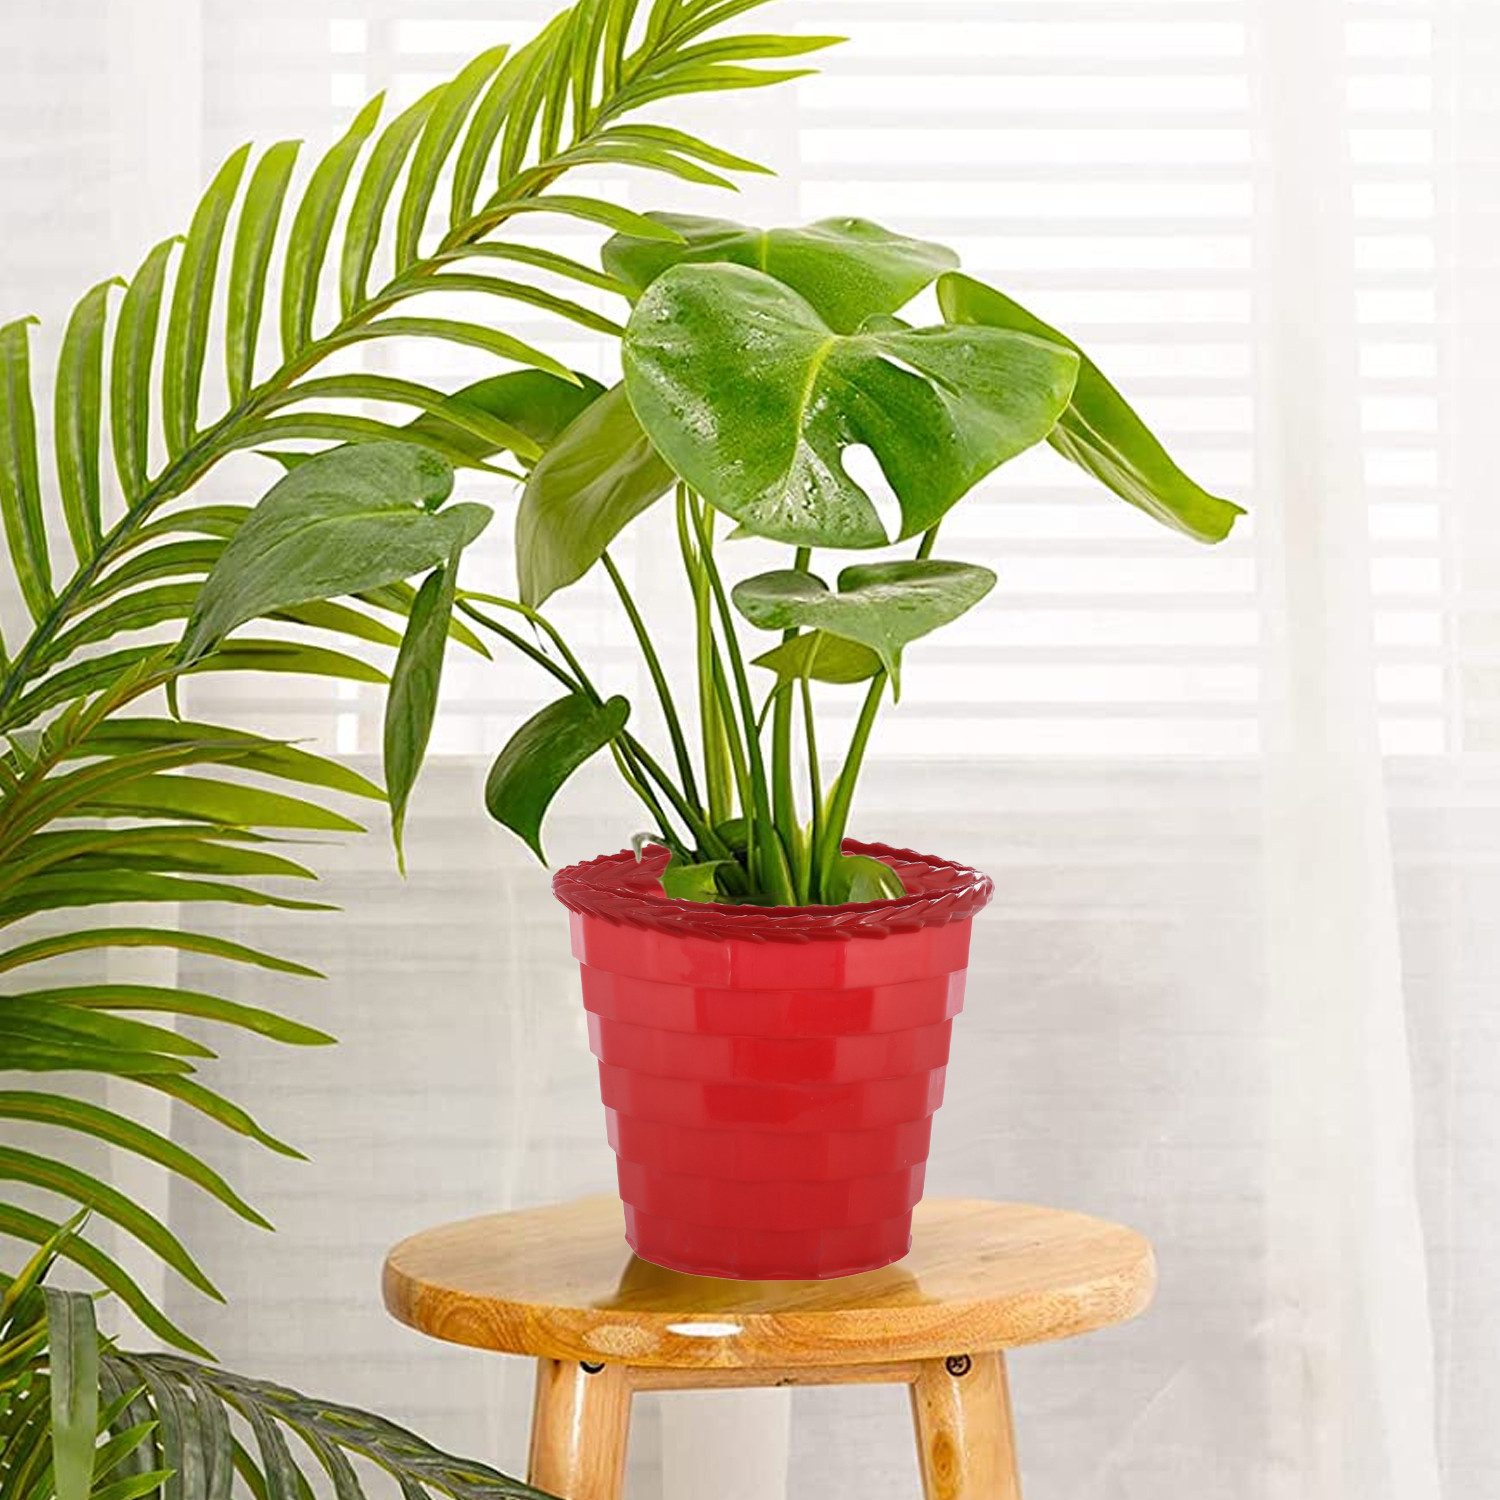 Kuber Industries Brick Flower Pot|Durable Plastic Flower Pots|Planters for Home Décor|Garden|Living Room|Balcony|8 Inch (Red)